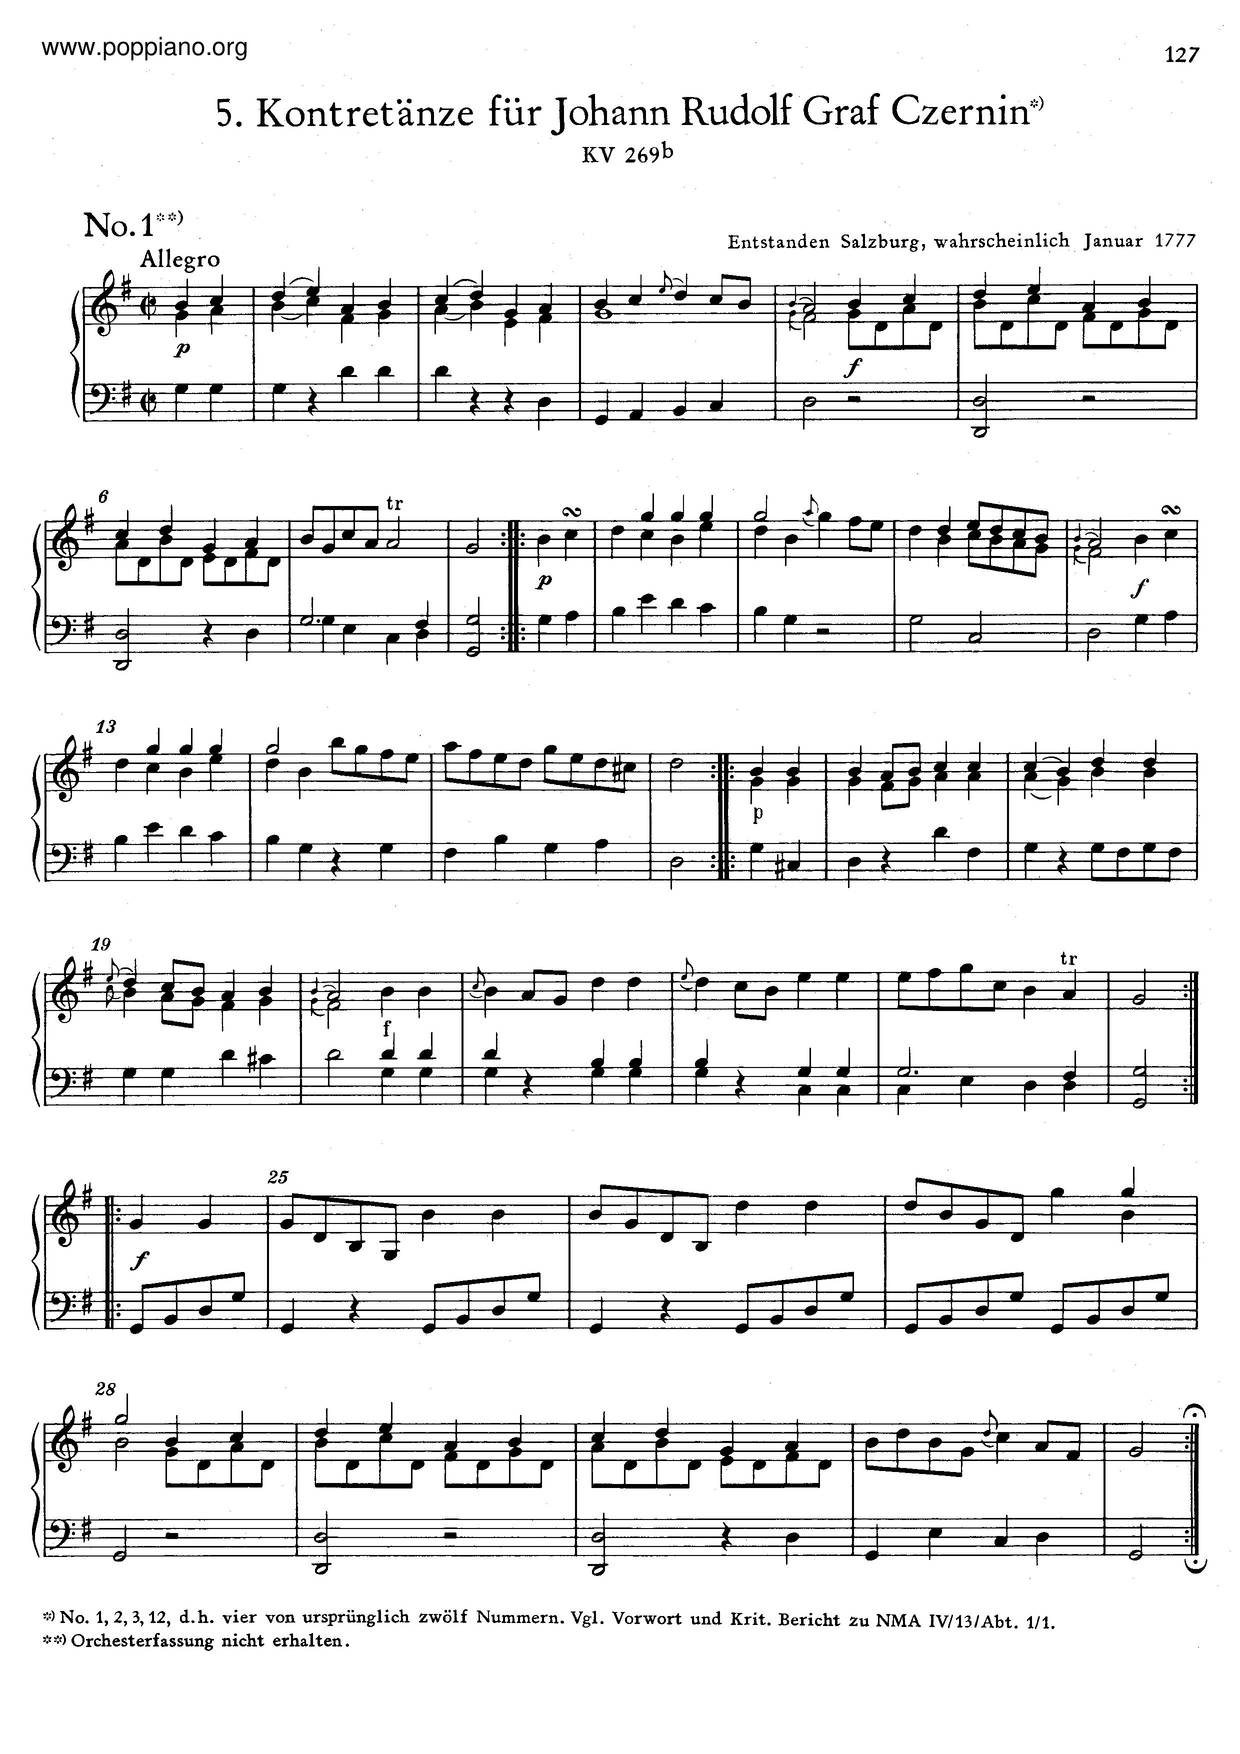 4 Country Dances, K. 269Bピアノ譜